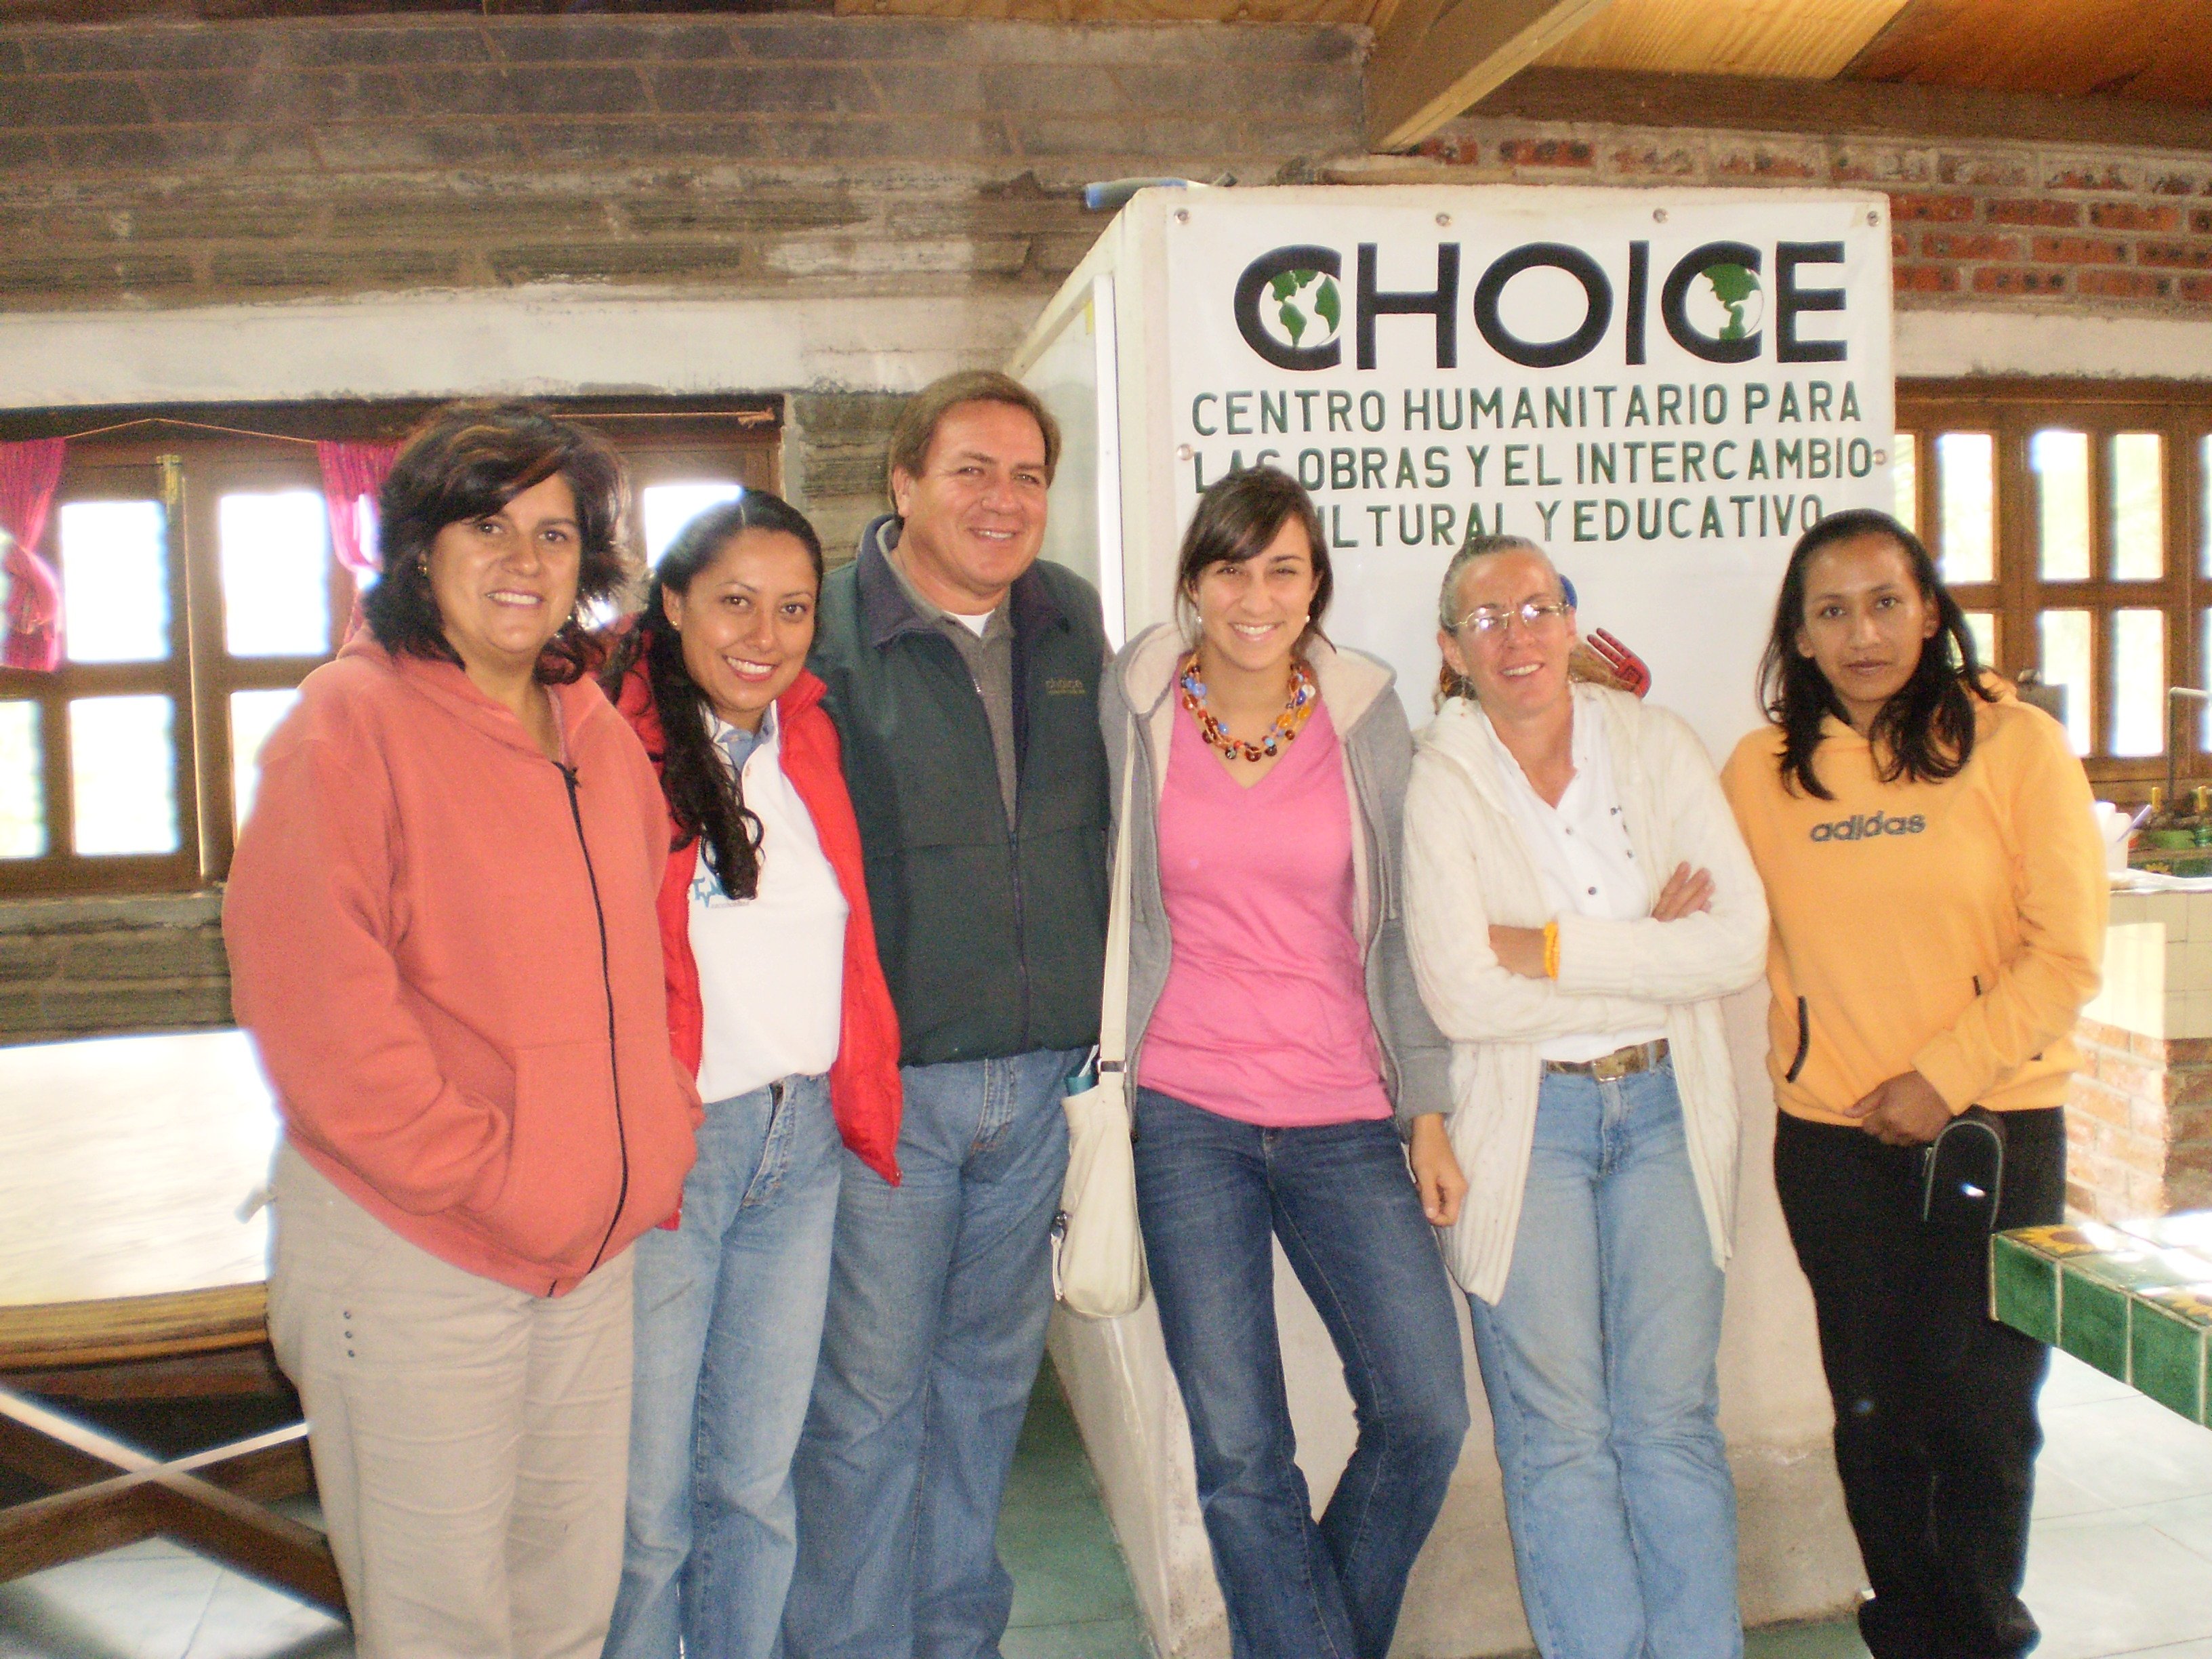 Juan Alducin with the CHOICE Humanitarian team in Mexico